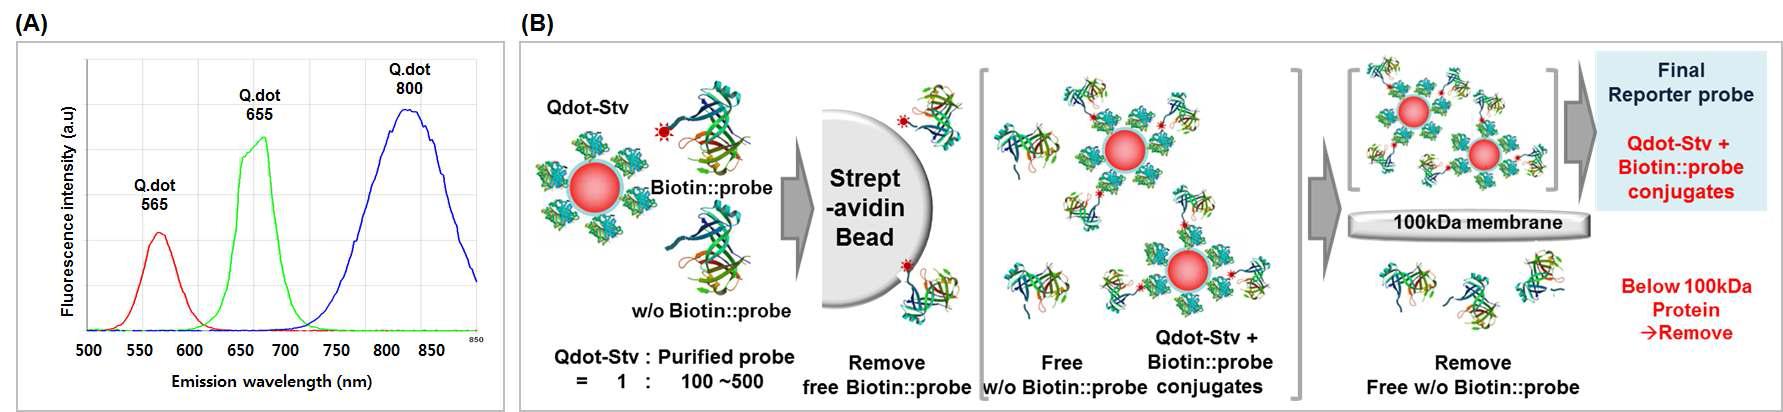 (A)동시 다중 검출시스템에 적용하기 위해 선정된 quantum dot들의 특정 emission 파장에서 나타내는 형광 측정 결과. (B) Qdot-Streptavidin+Biotin::probe 제작 및 정제 과정을 나타낸 모식도